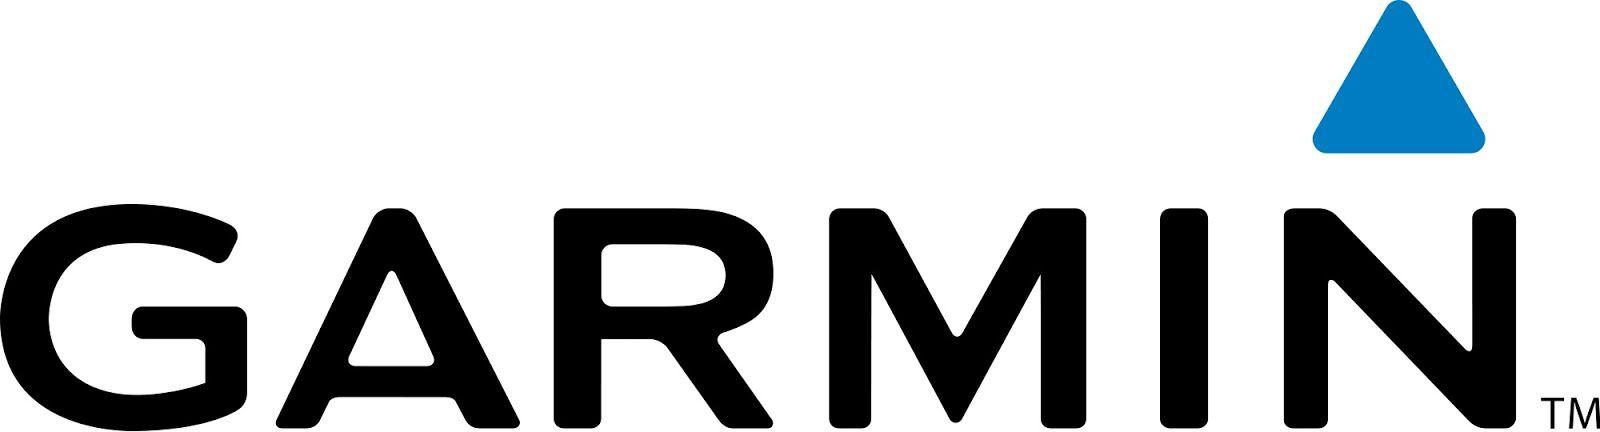 Garmin Pay Logo - Garmin partners OCBC Bank to launch Garmin Pay in Singapore - The ...